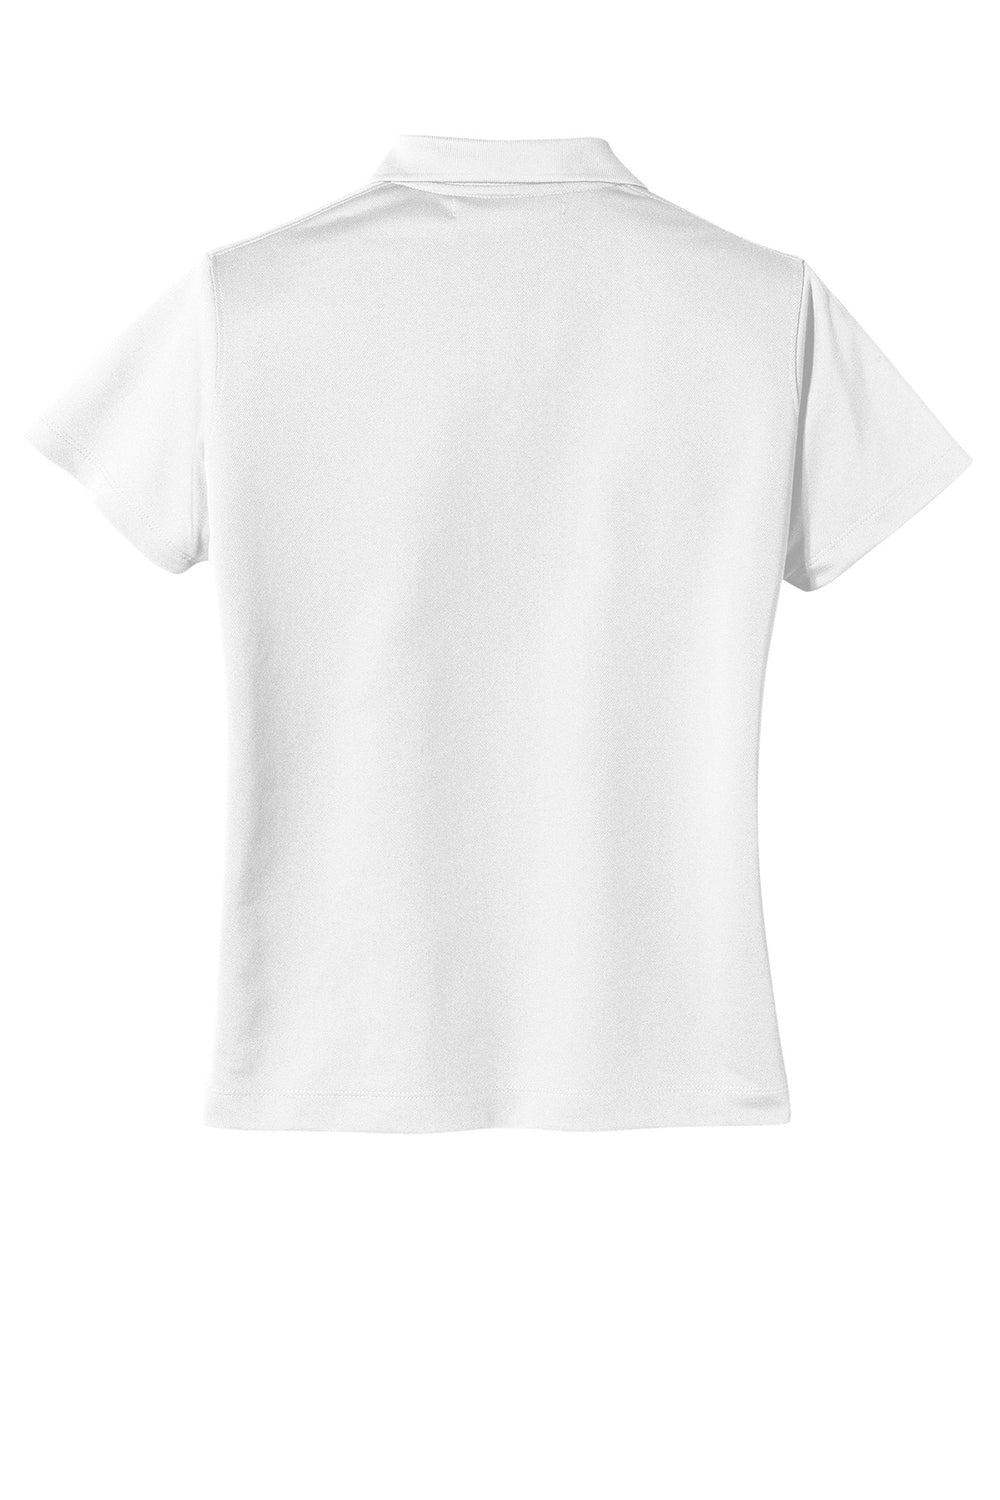 Nike 203697 Womens Tech Basic Dri-Fit Moisture Wicking Short Sleeve Polo Shirt White Flat Back